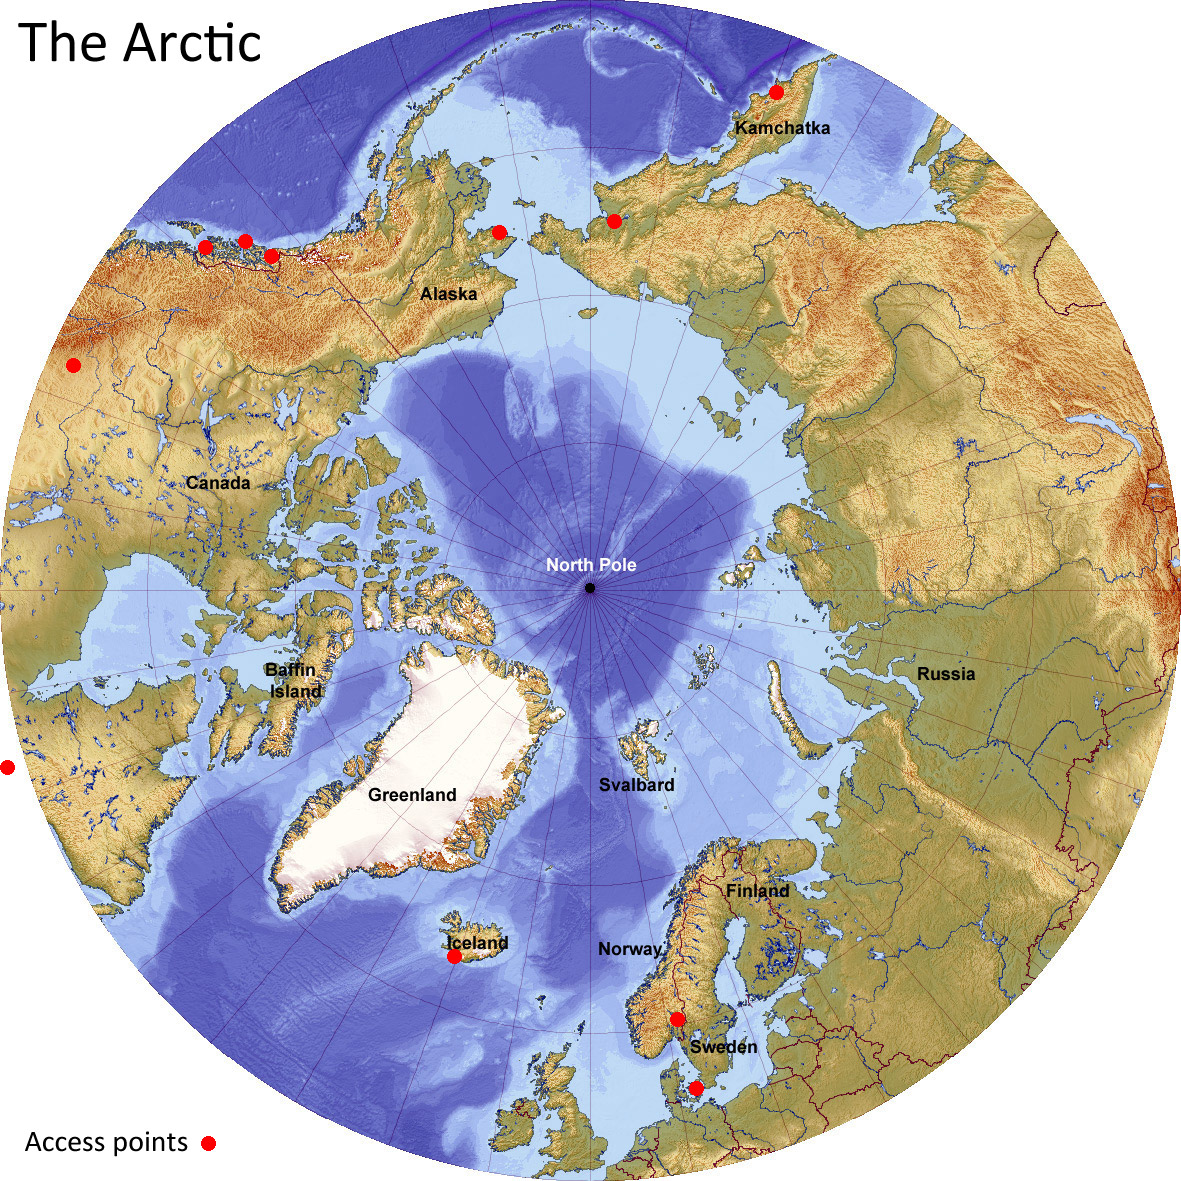 Polar Travel - Antarctica and the Arctic - A Comaparison for Visitors